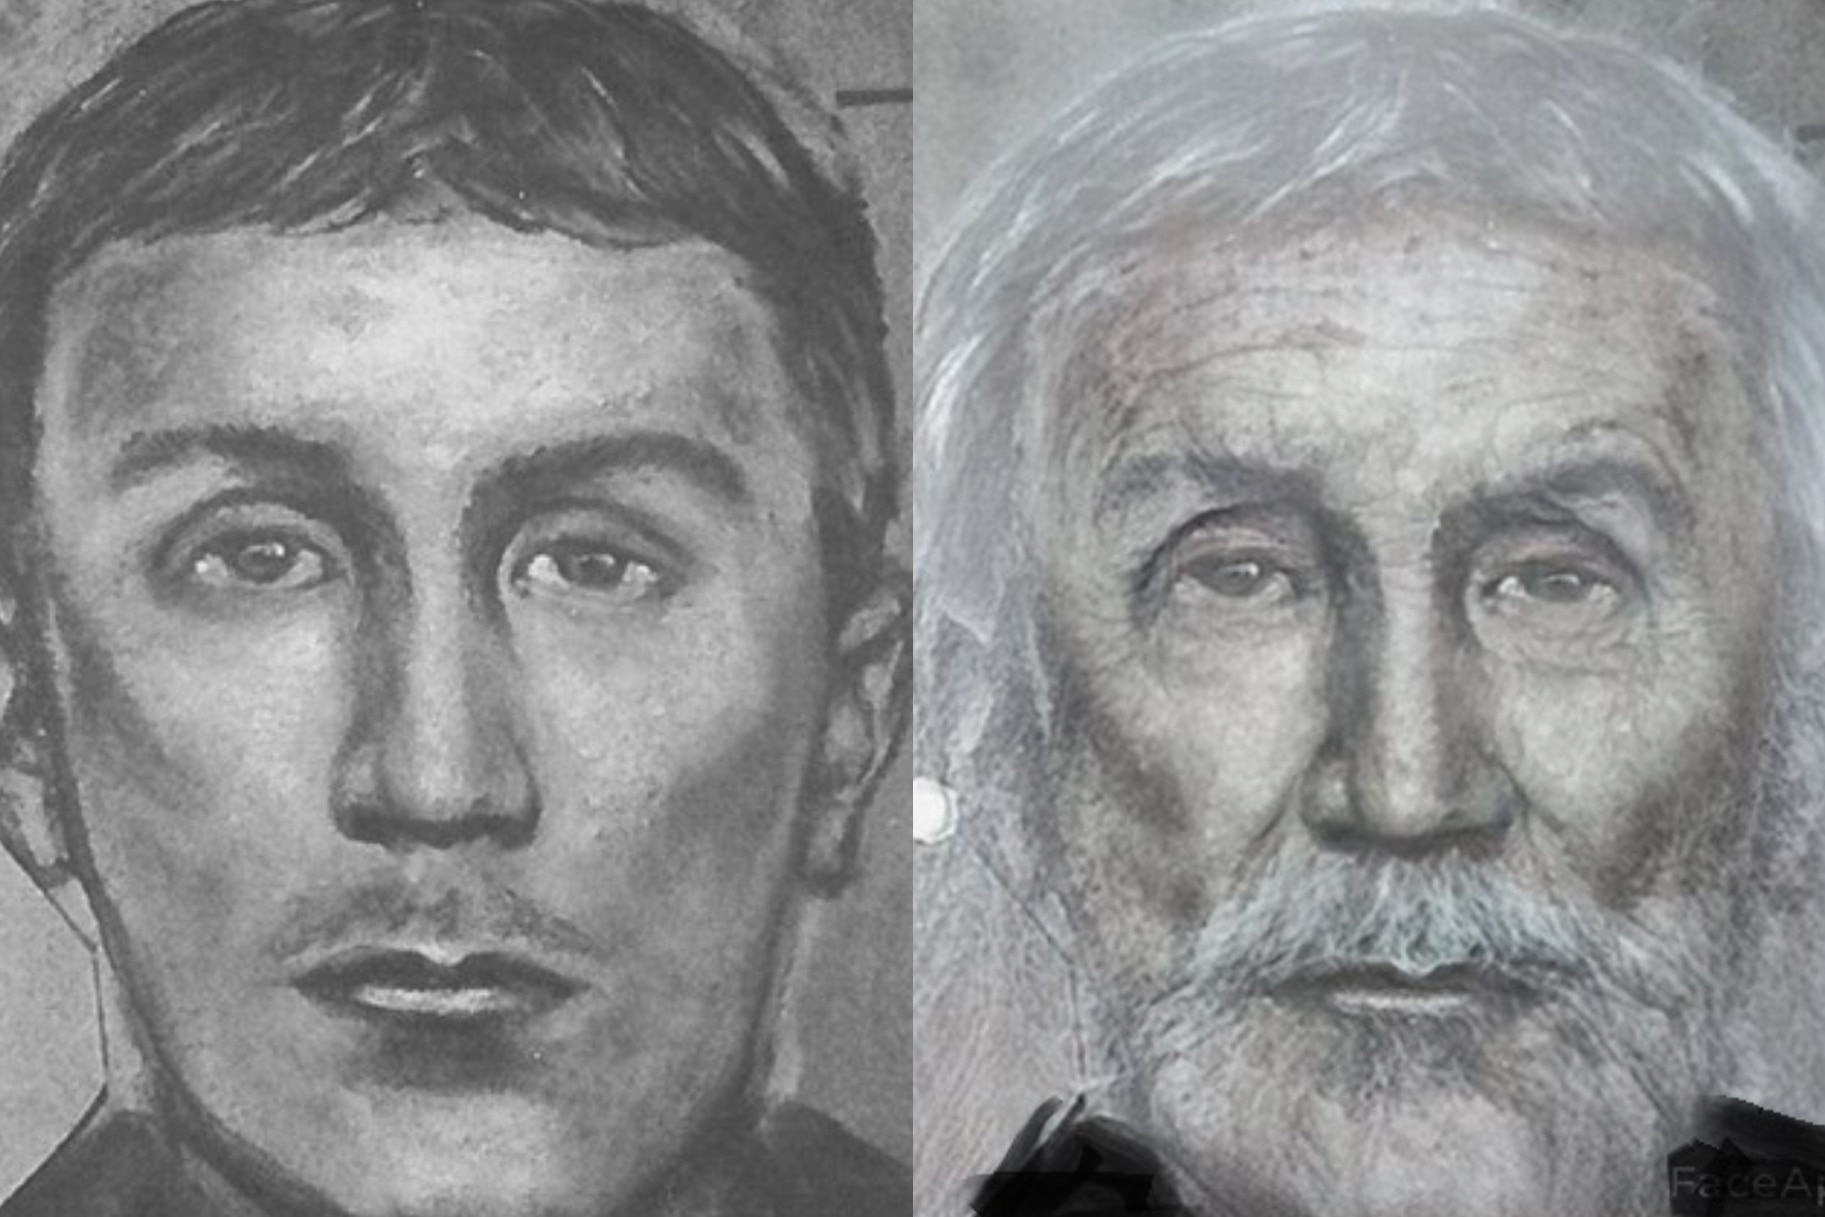 Aged Progression Composite Sketches of the I-70 Killer